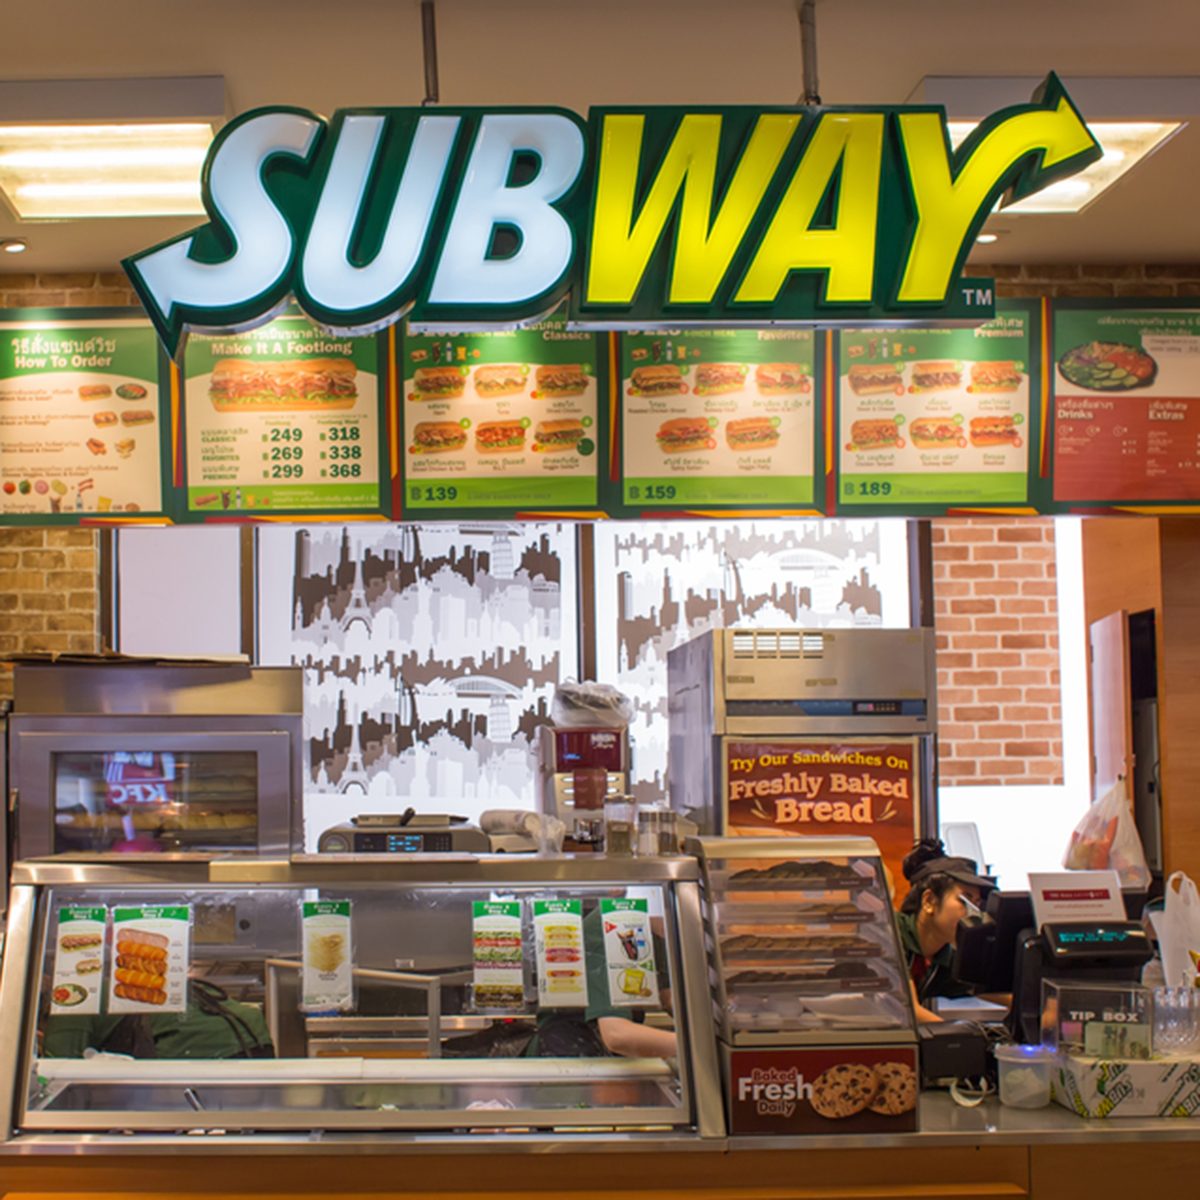 Subway declares biggest menu change since 1965 - FoodChain Magazine